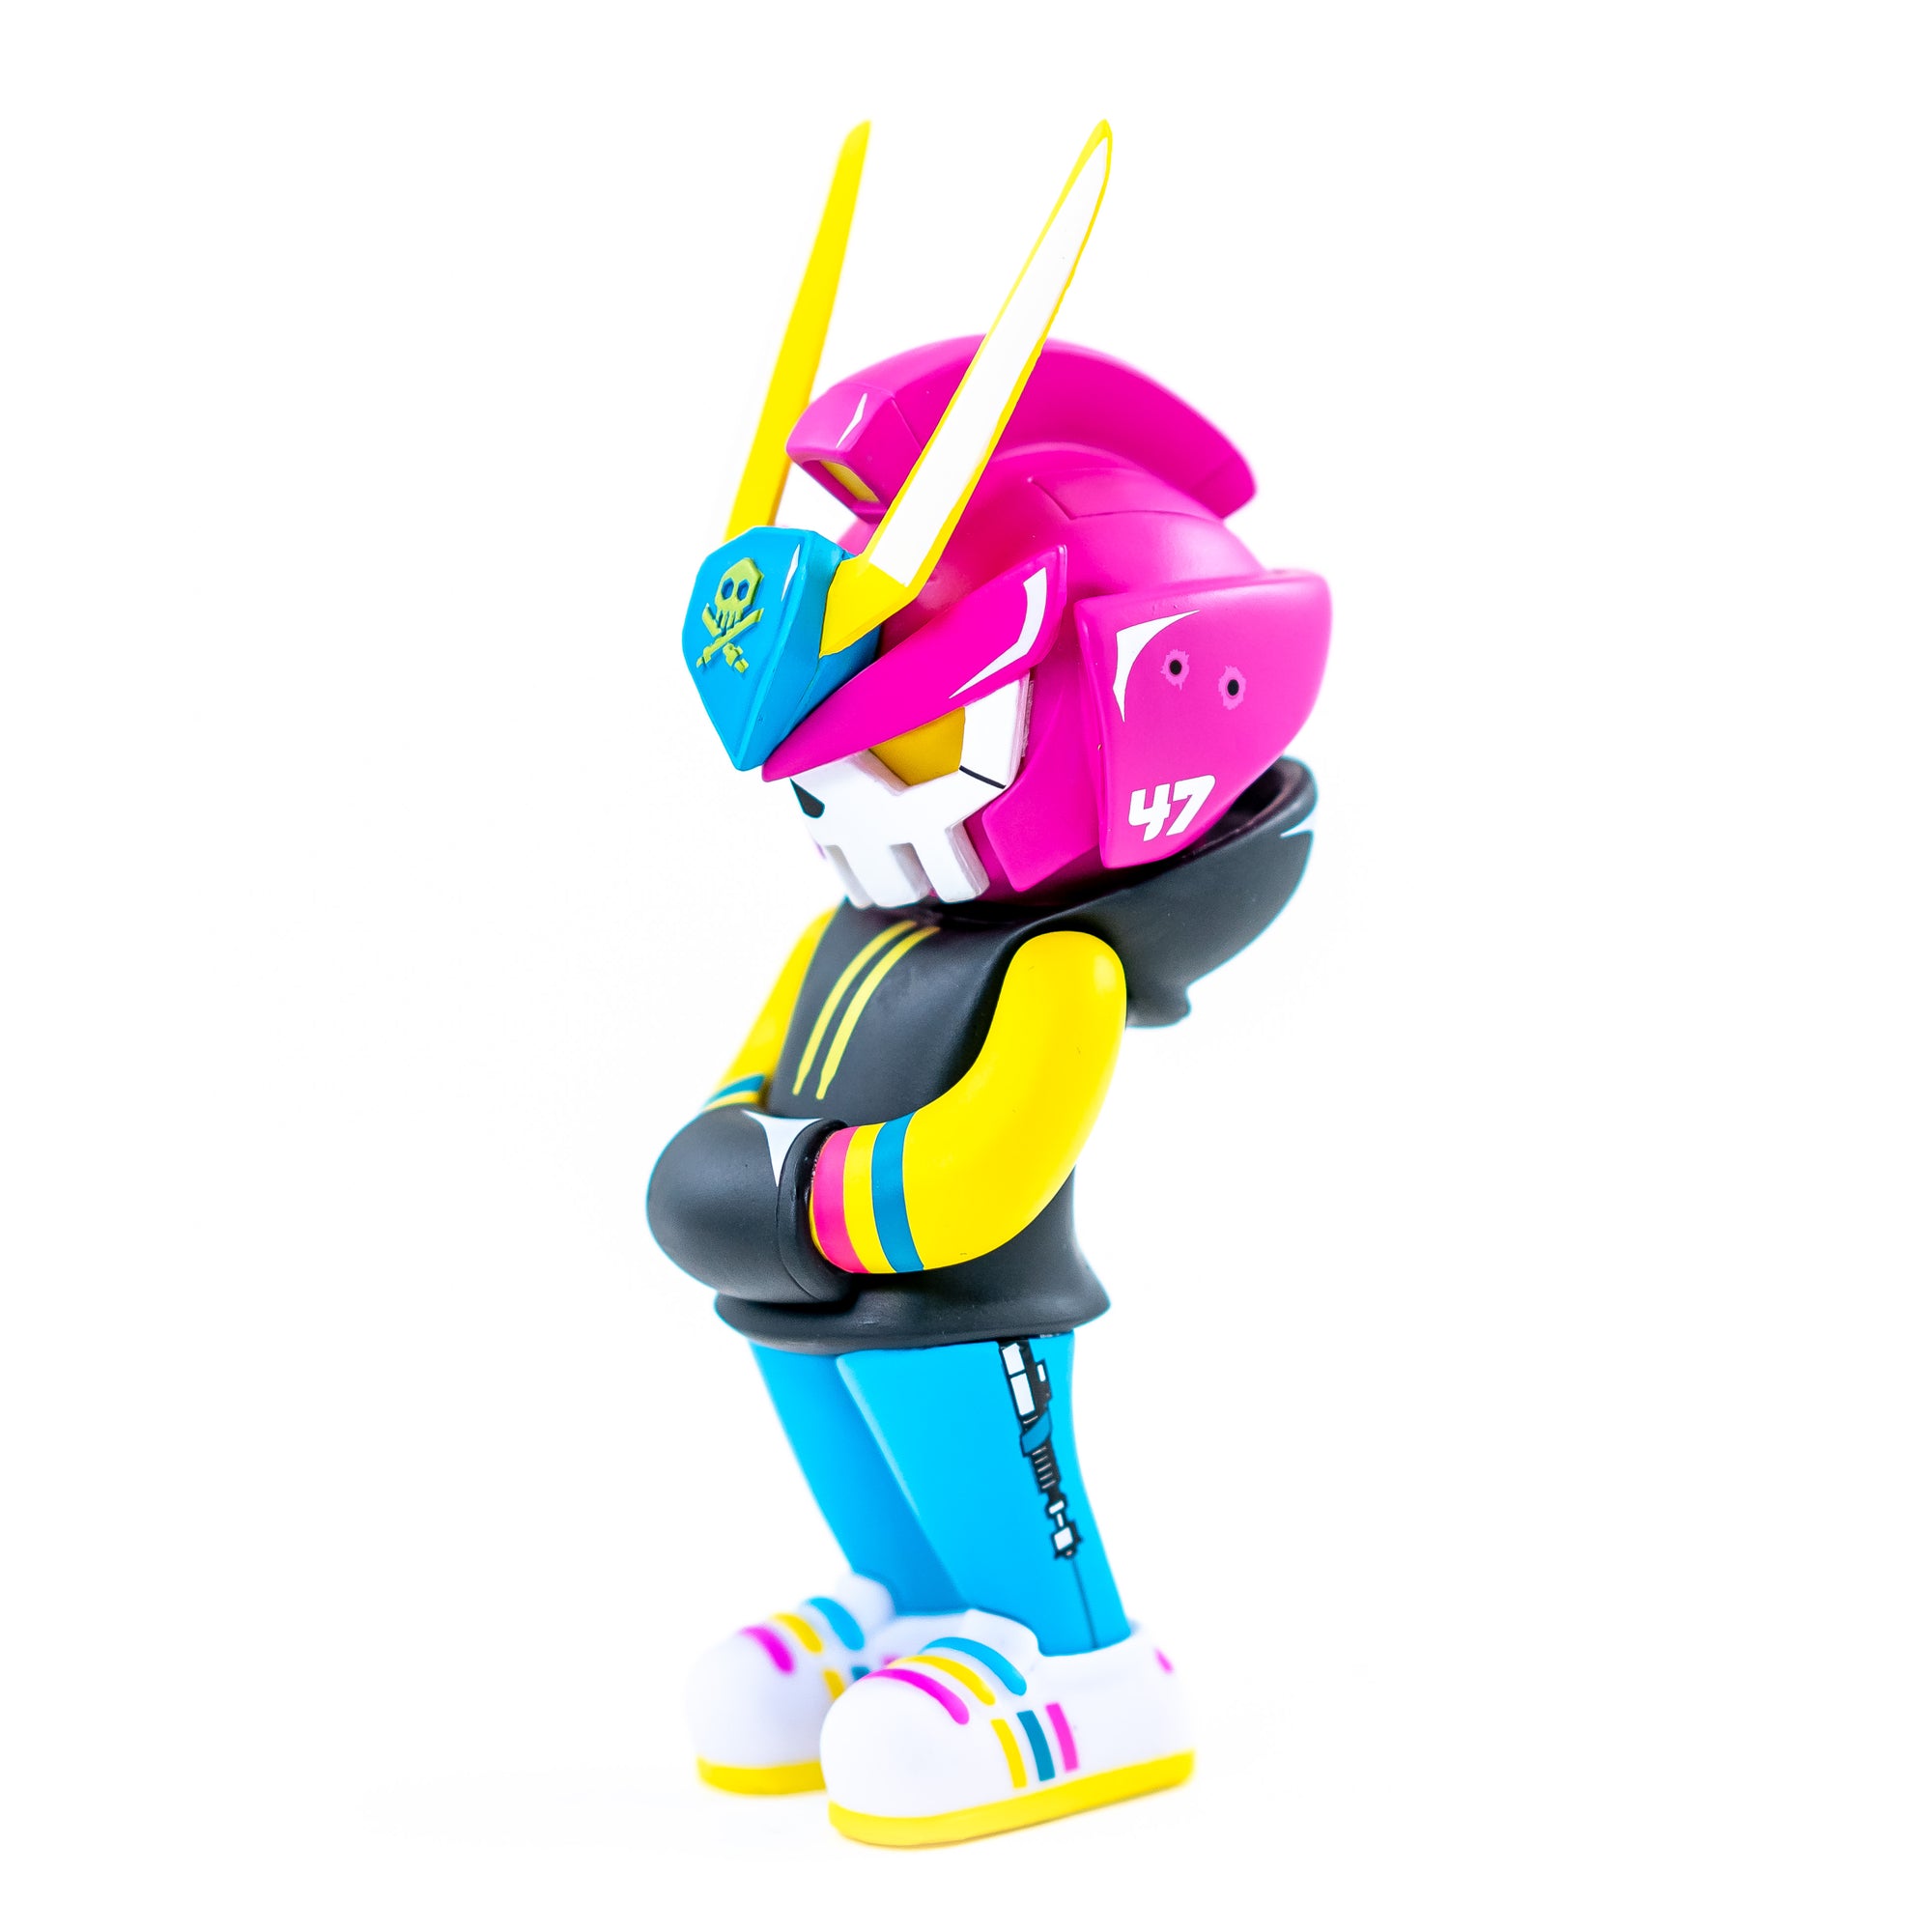 Pirateq-47 Neo-Tokyo Pink TEQ 63 Toy Figure by Quiccs x SergAndDestroy